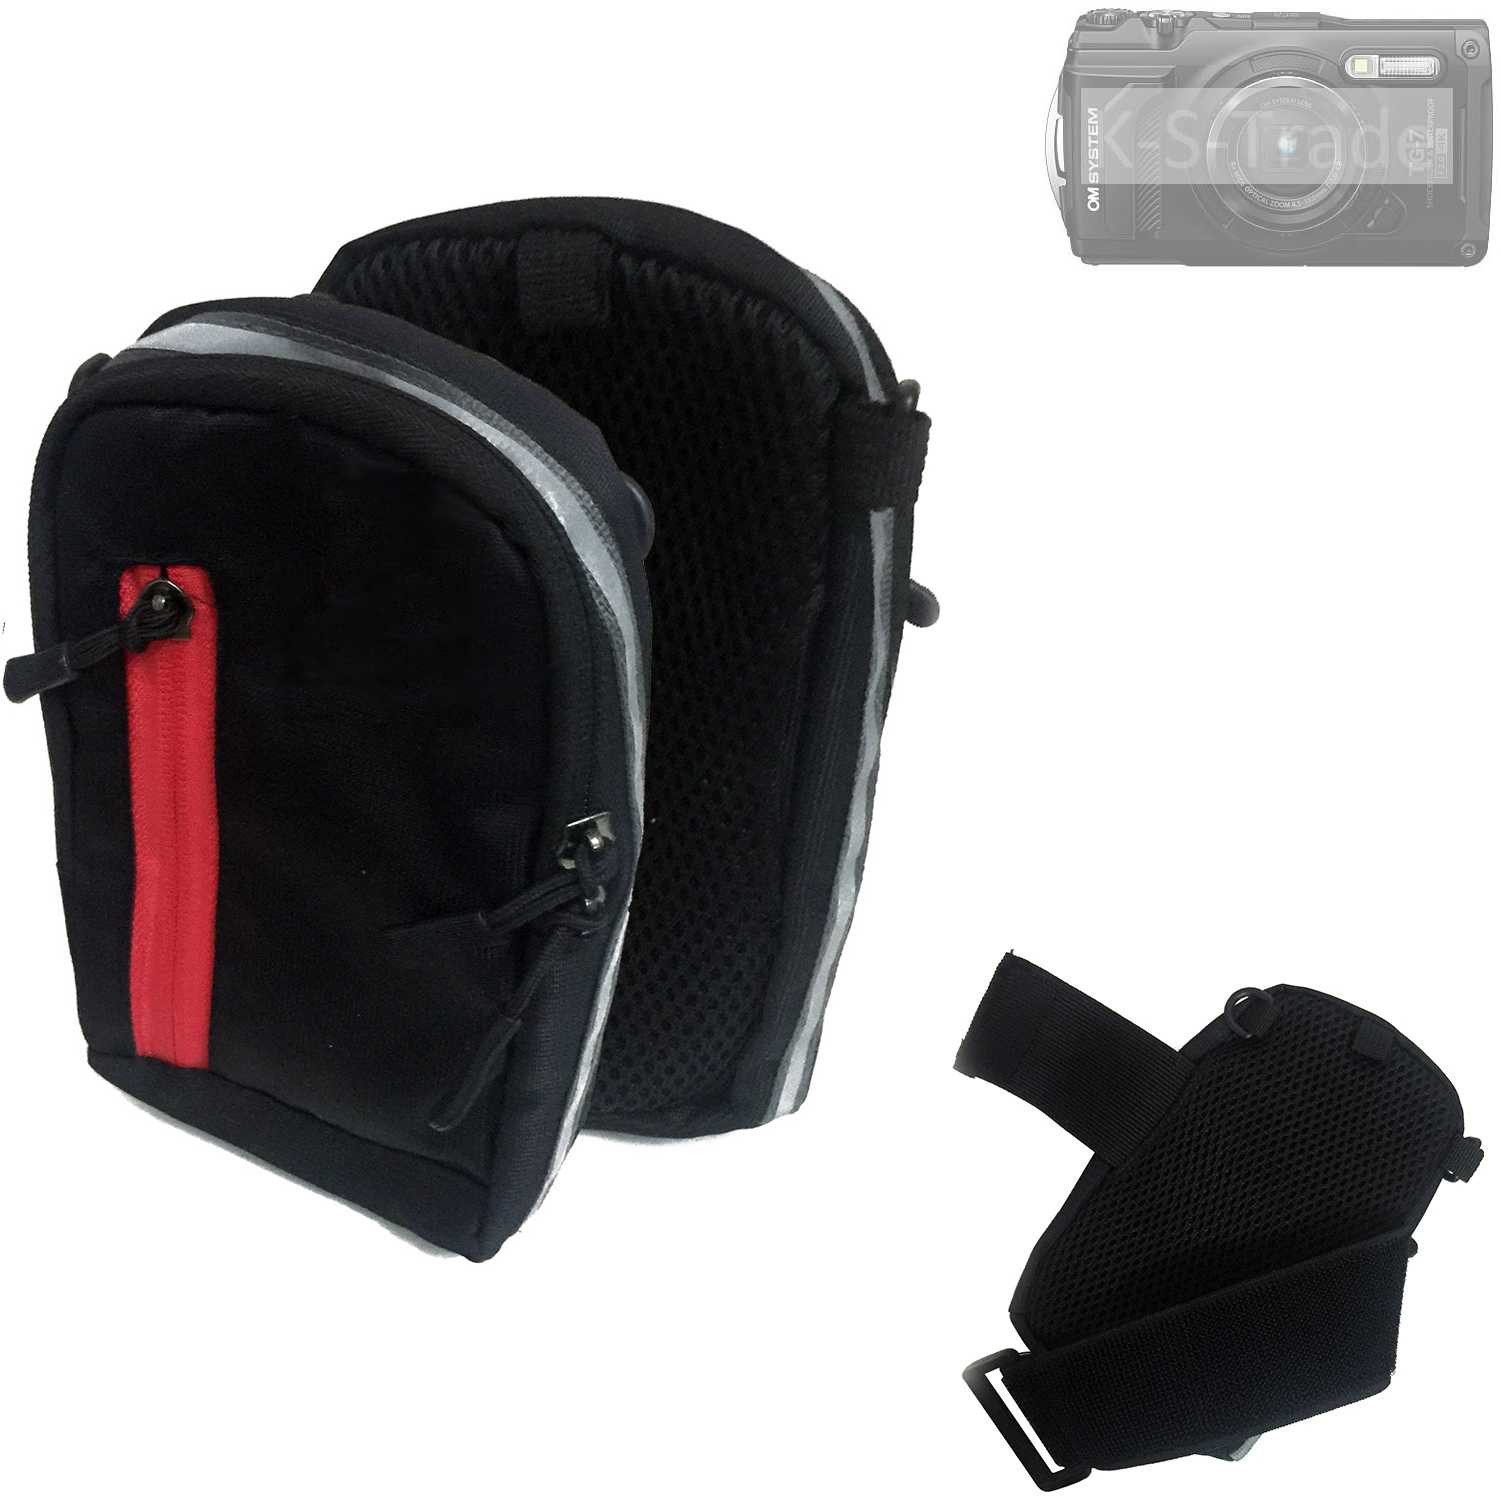 K-S-Trade Kameratasche für OM System TG-7, Fototasche Kameratasche Gürteltasche Schutz Hülle Case bag